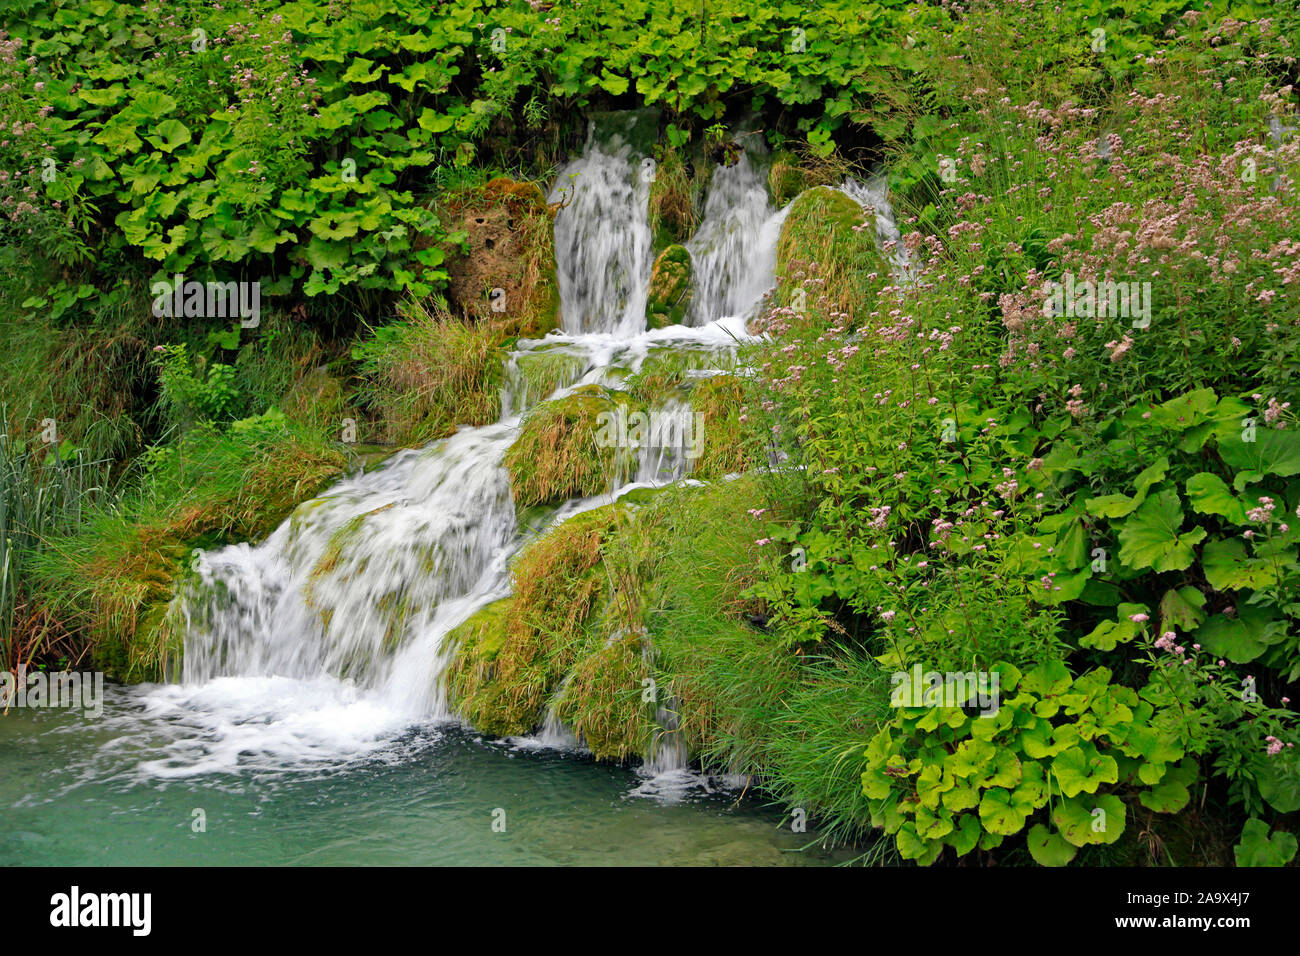 Kaskade eines Wasserfalls im Nationalpark Plitvicer Seen / Nacionalni park Plitvička jezera oder Plitvice, Kroatien Stock Photo